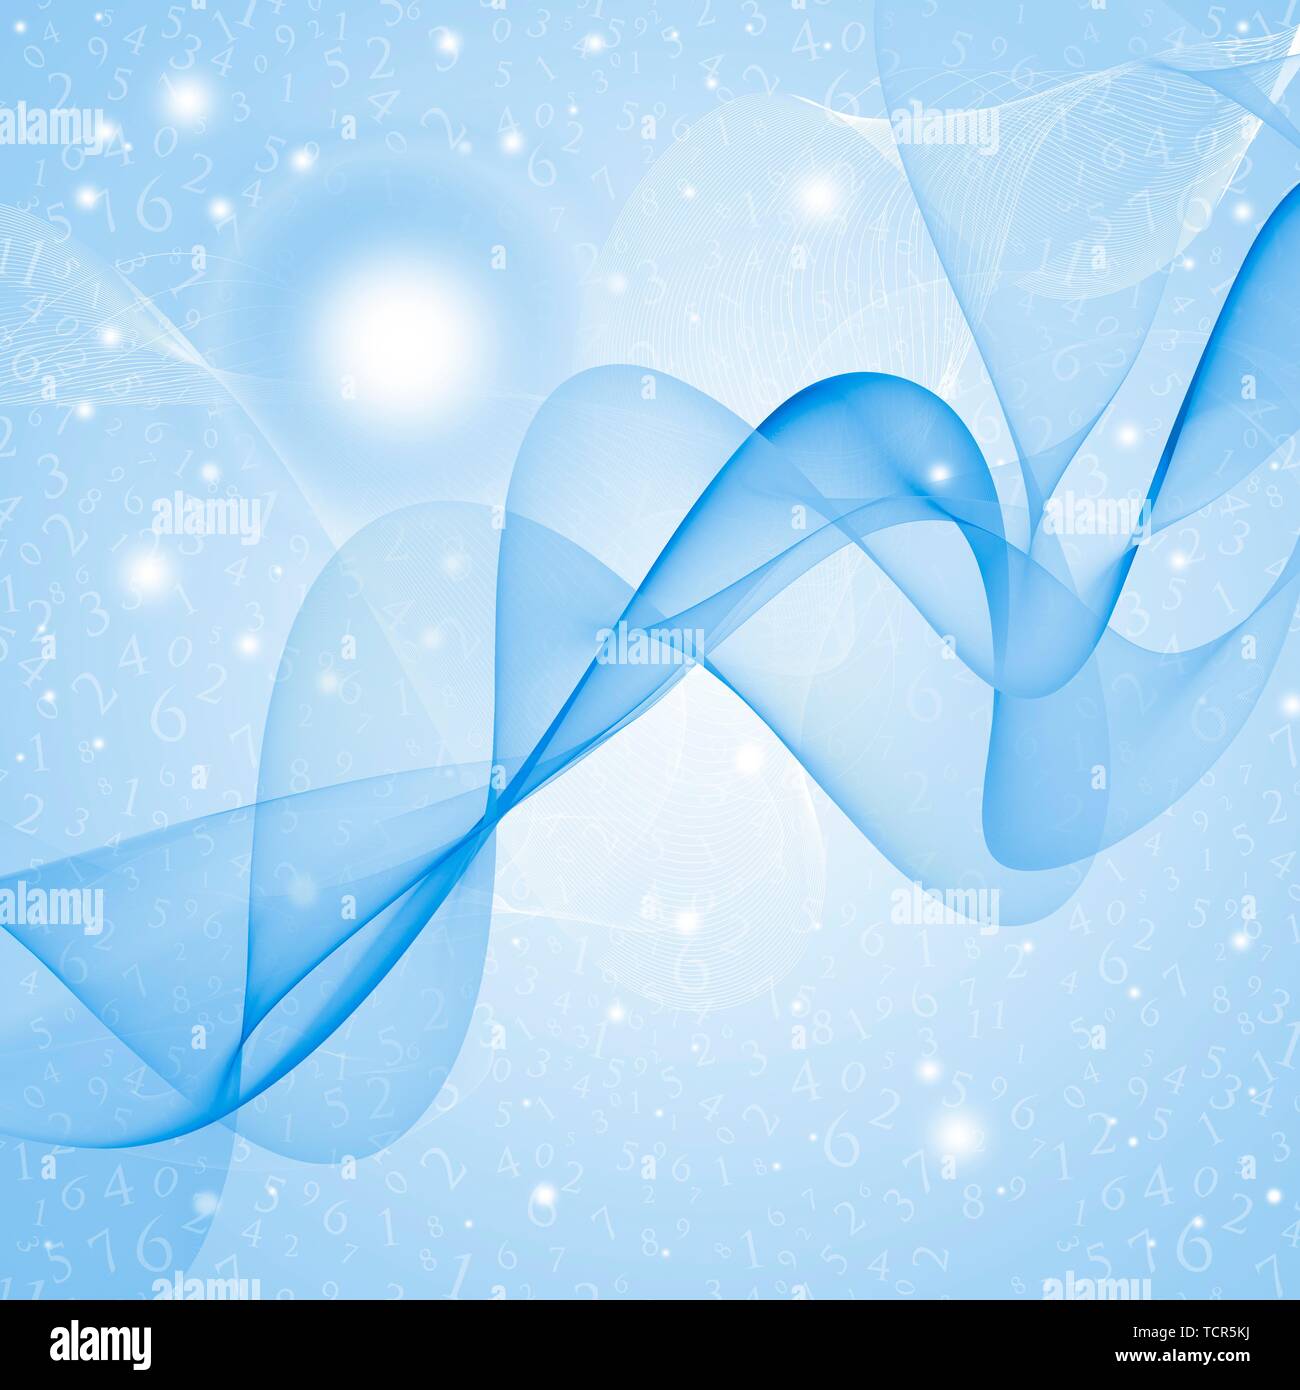 Blue swirls, illustration Stock Photo